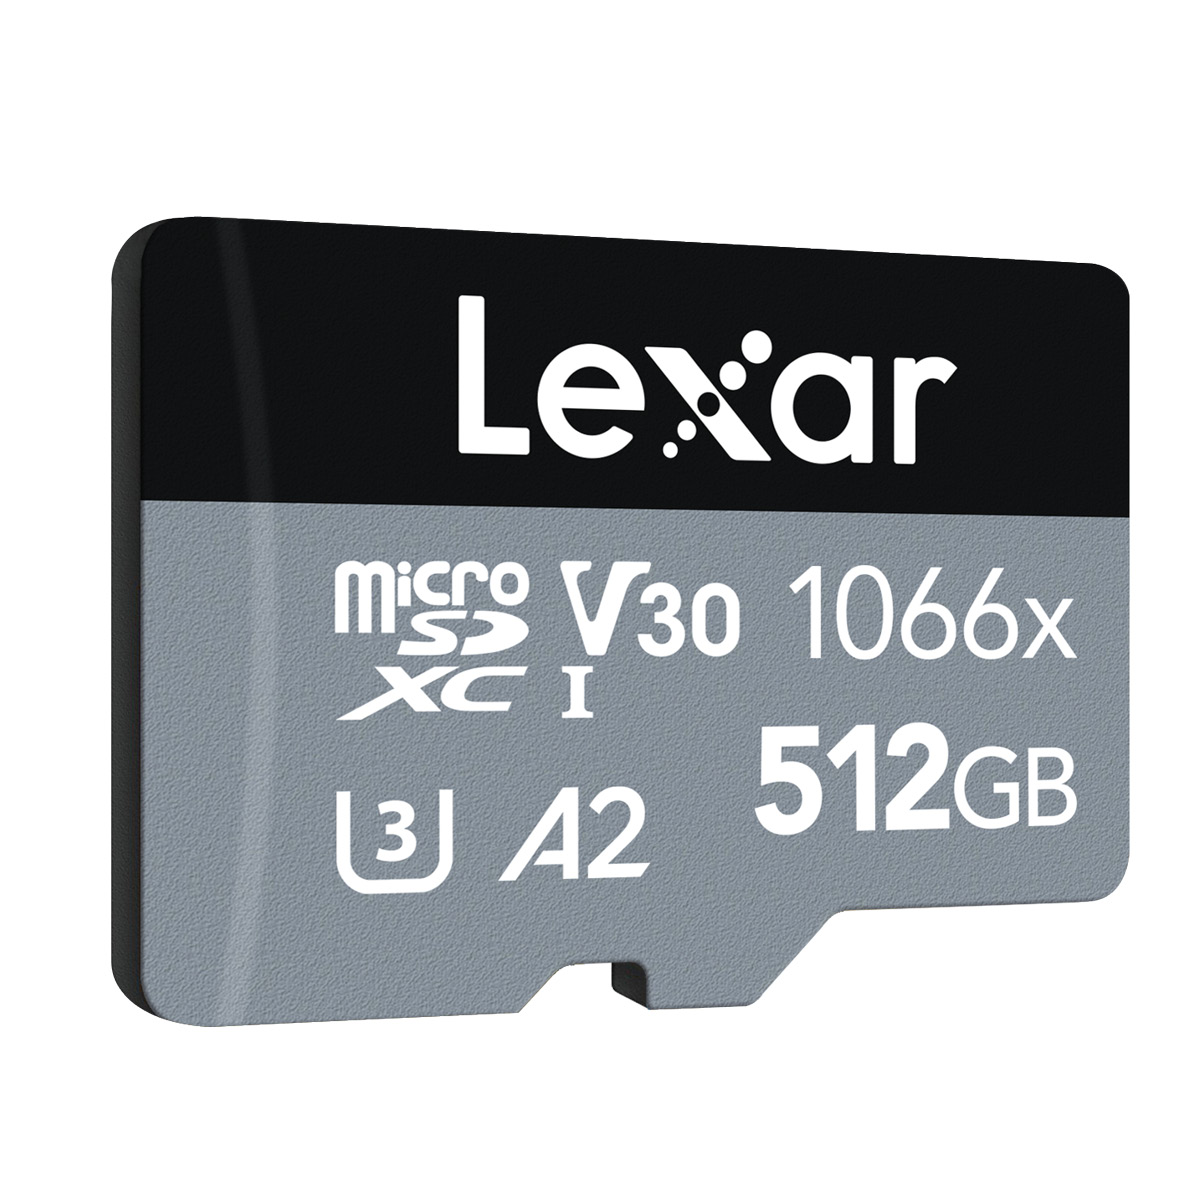 Lexar 512 GB Micro SDXC Pro Silver 1066x